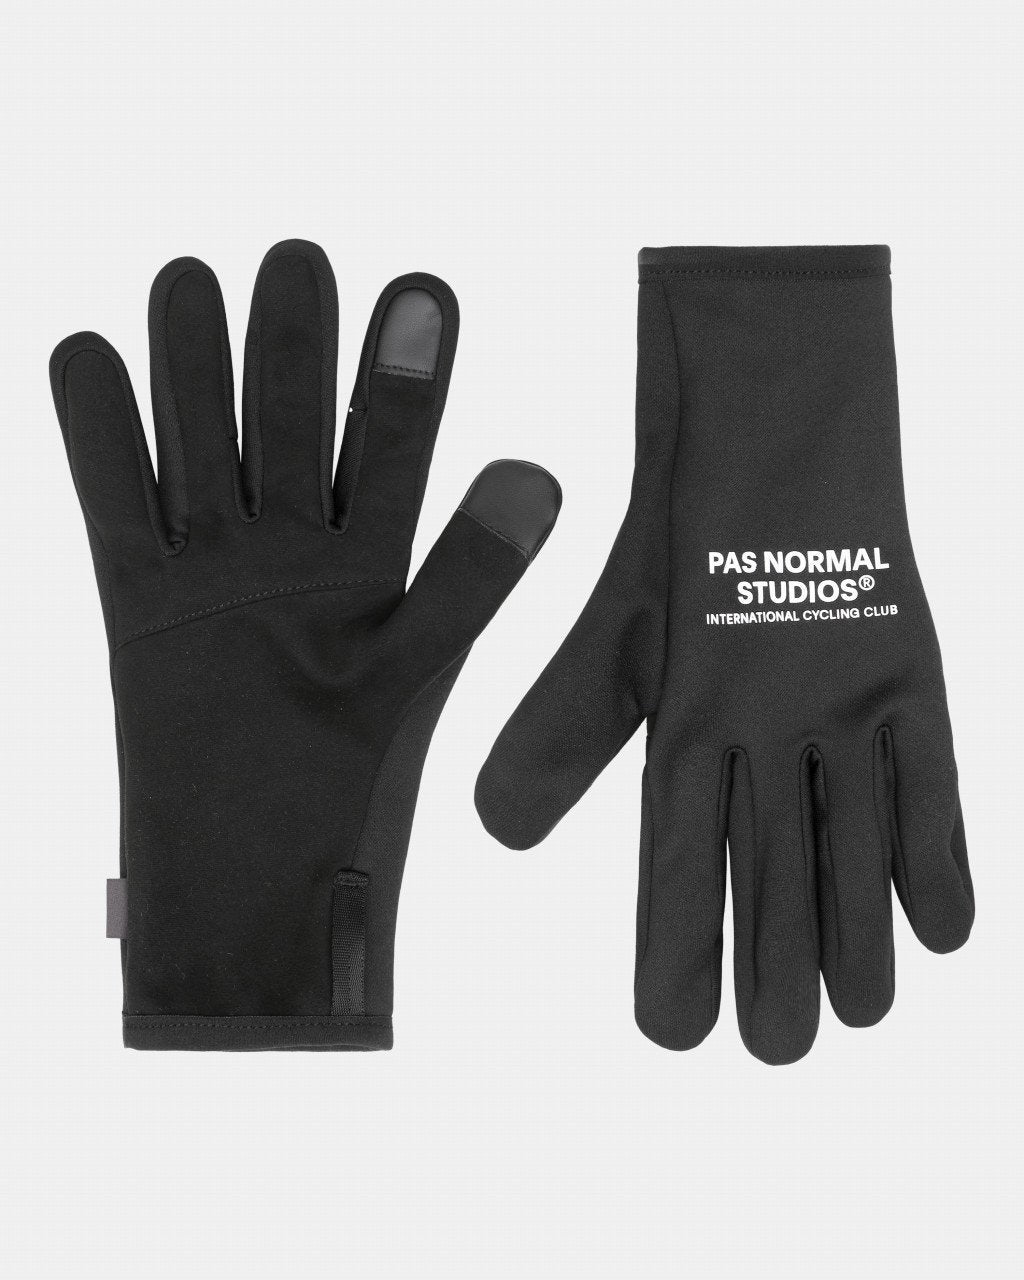 Pas Normal Studios Logo Transition Gloves - Black